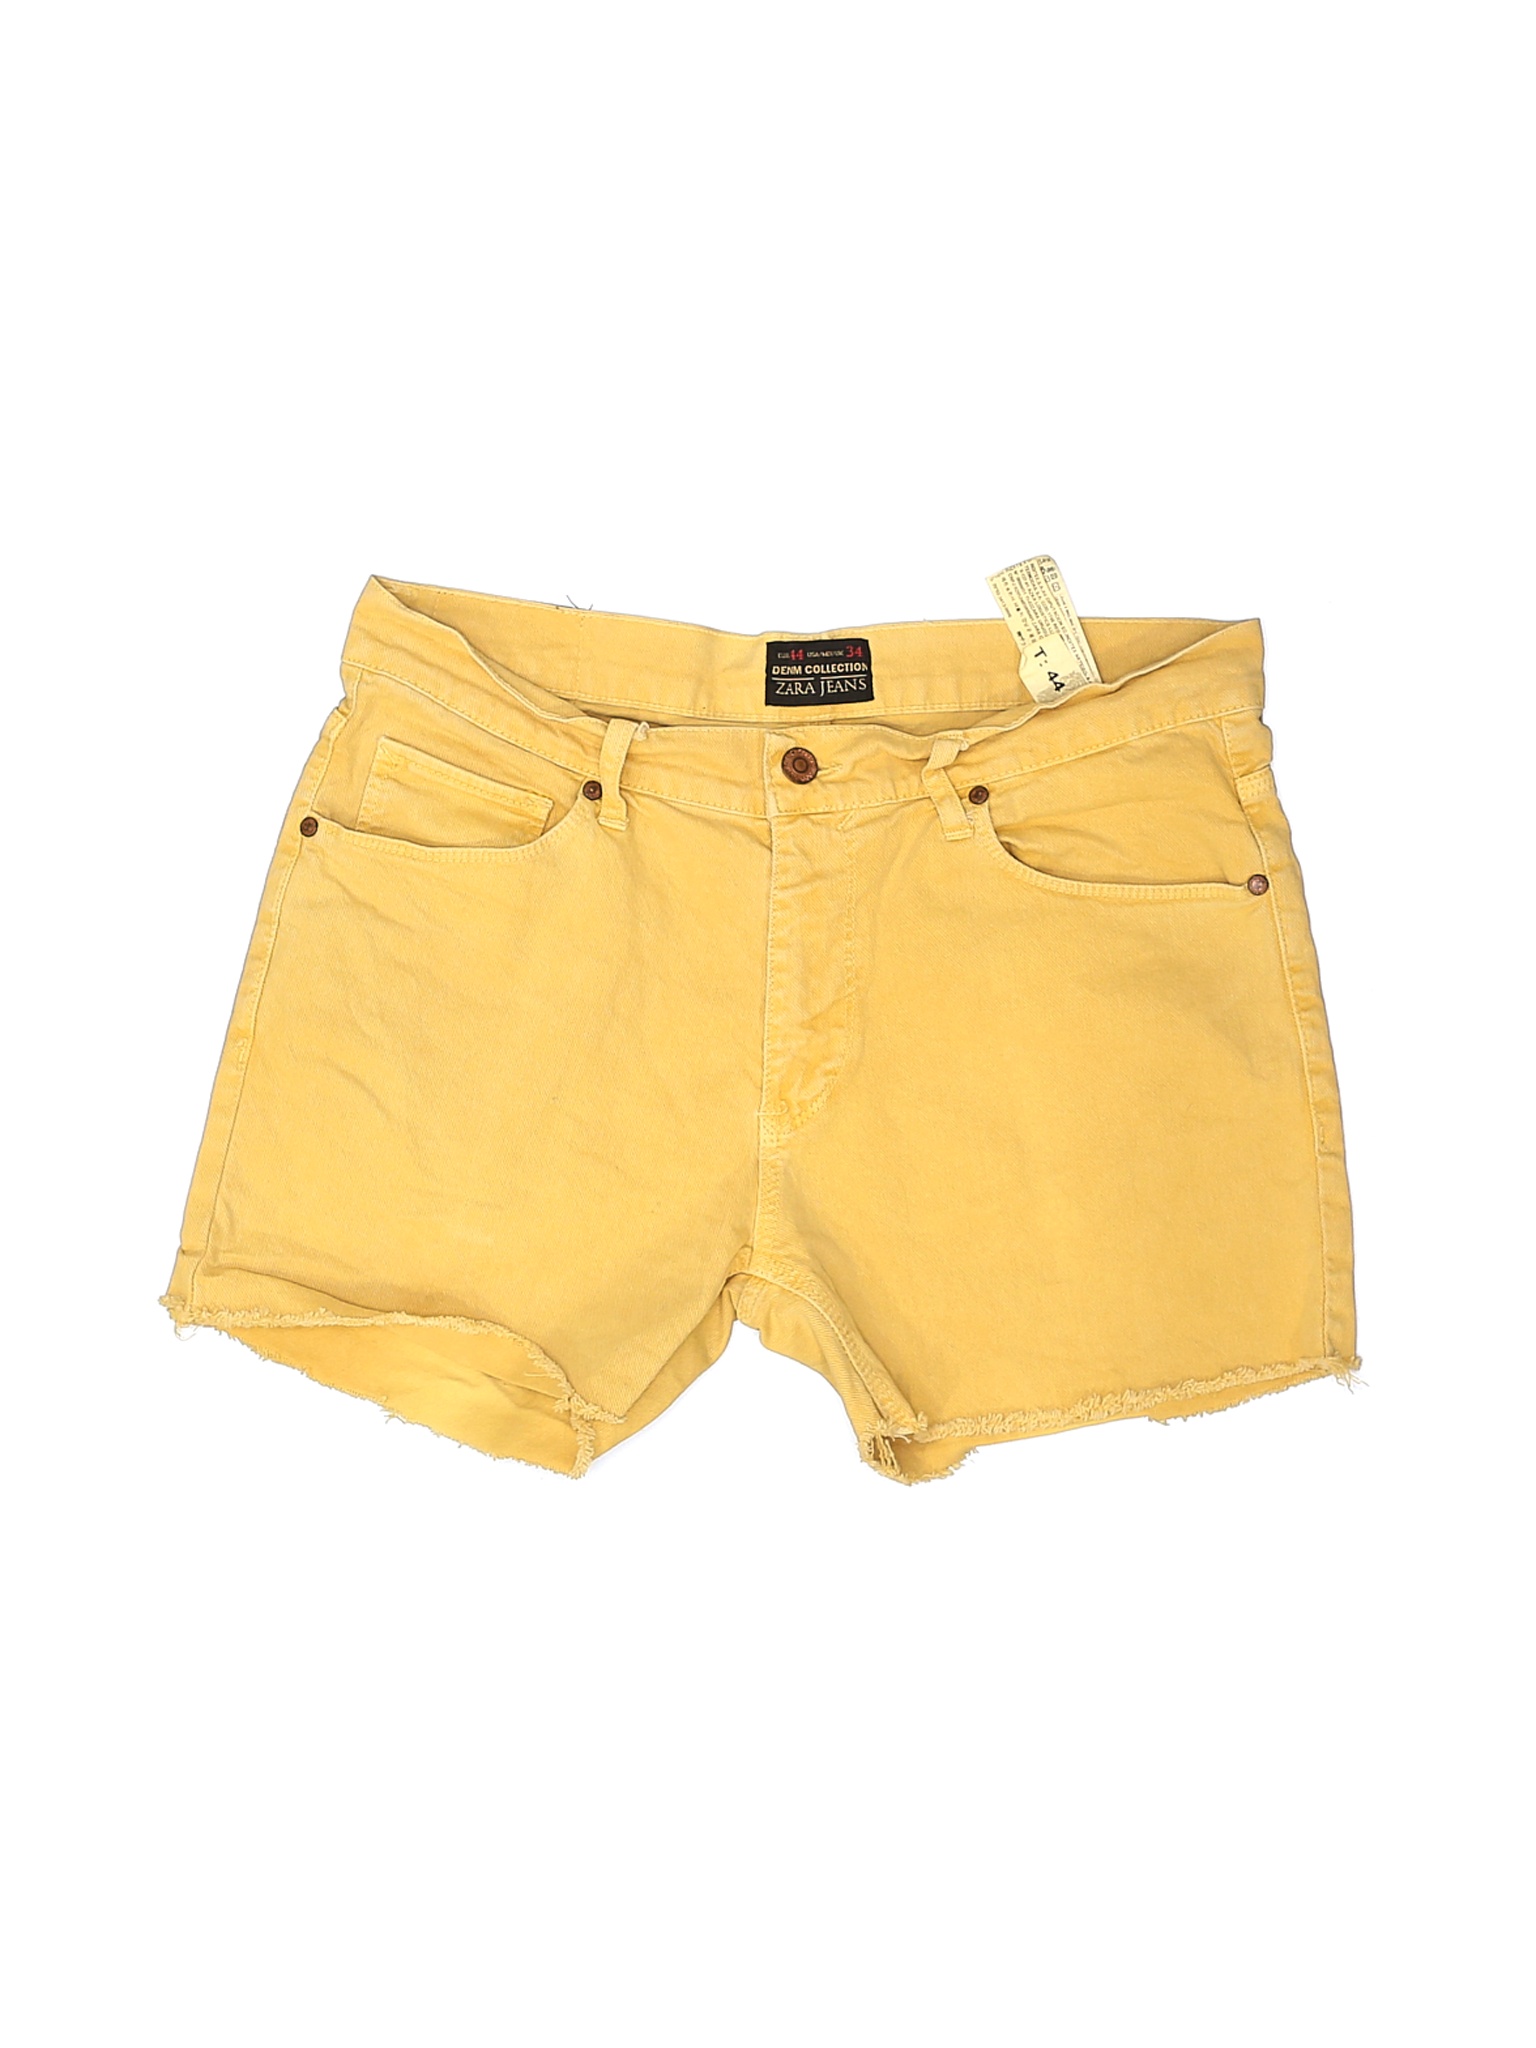 Zara Women Yellow Denim Shorts 34W | eBay